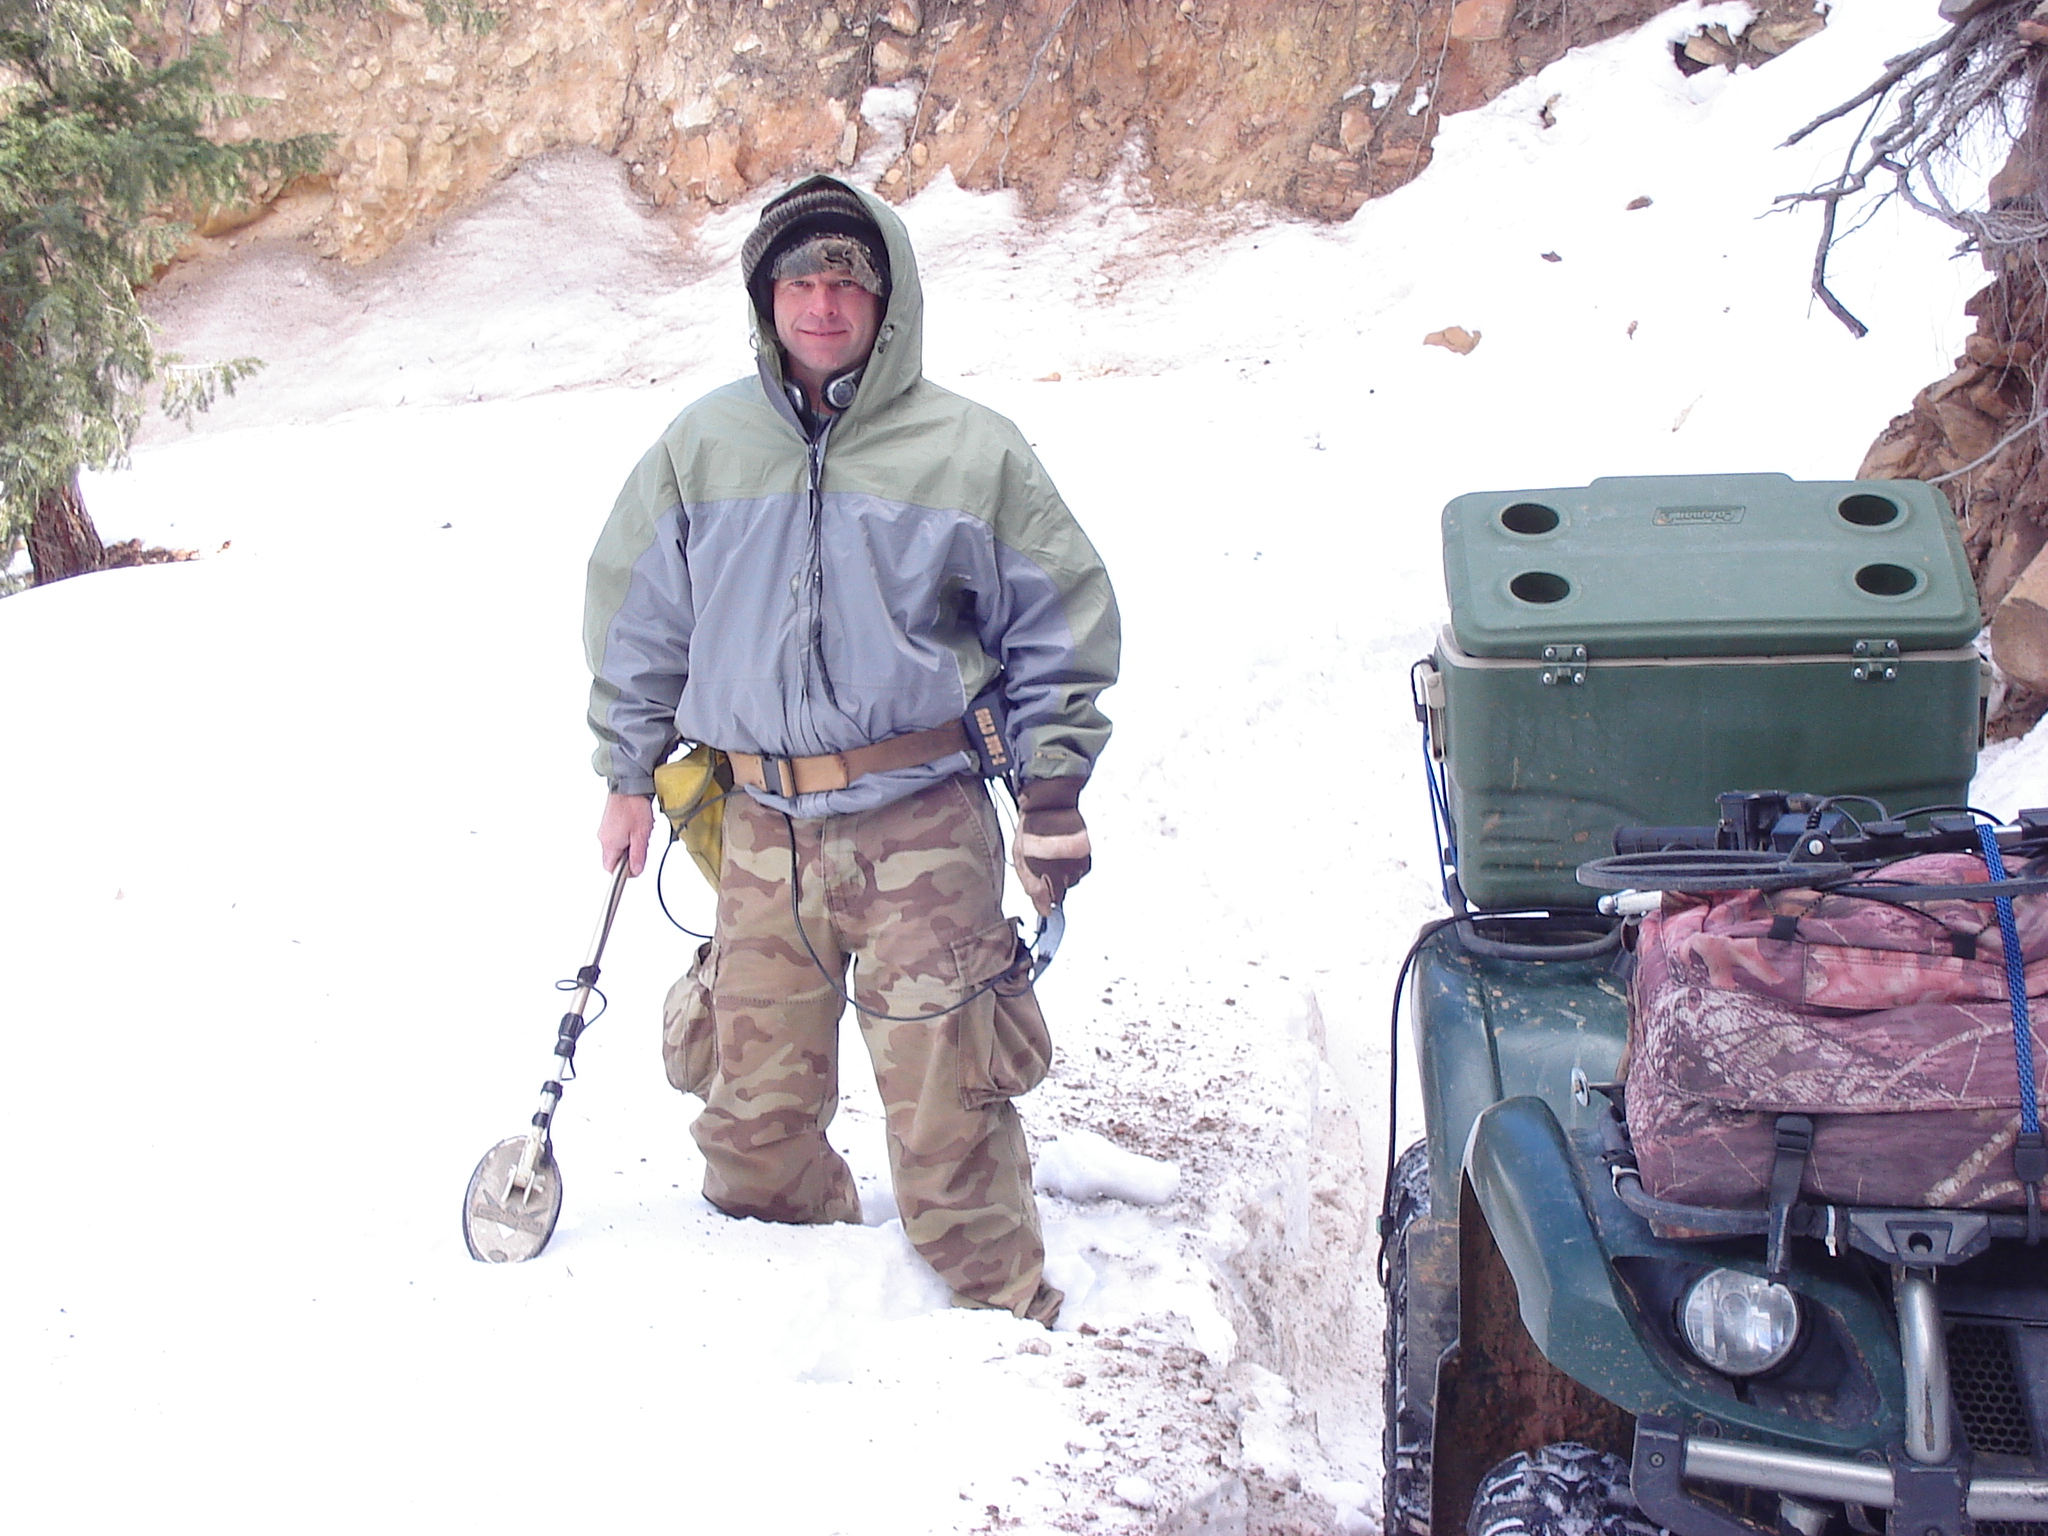 Keith hunting in the snow at Glorieta Mountian!